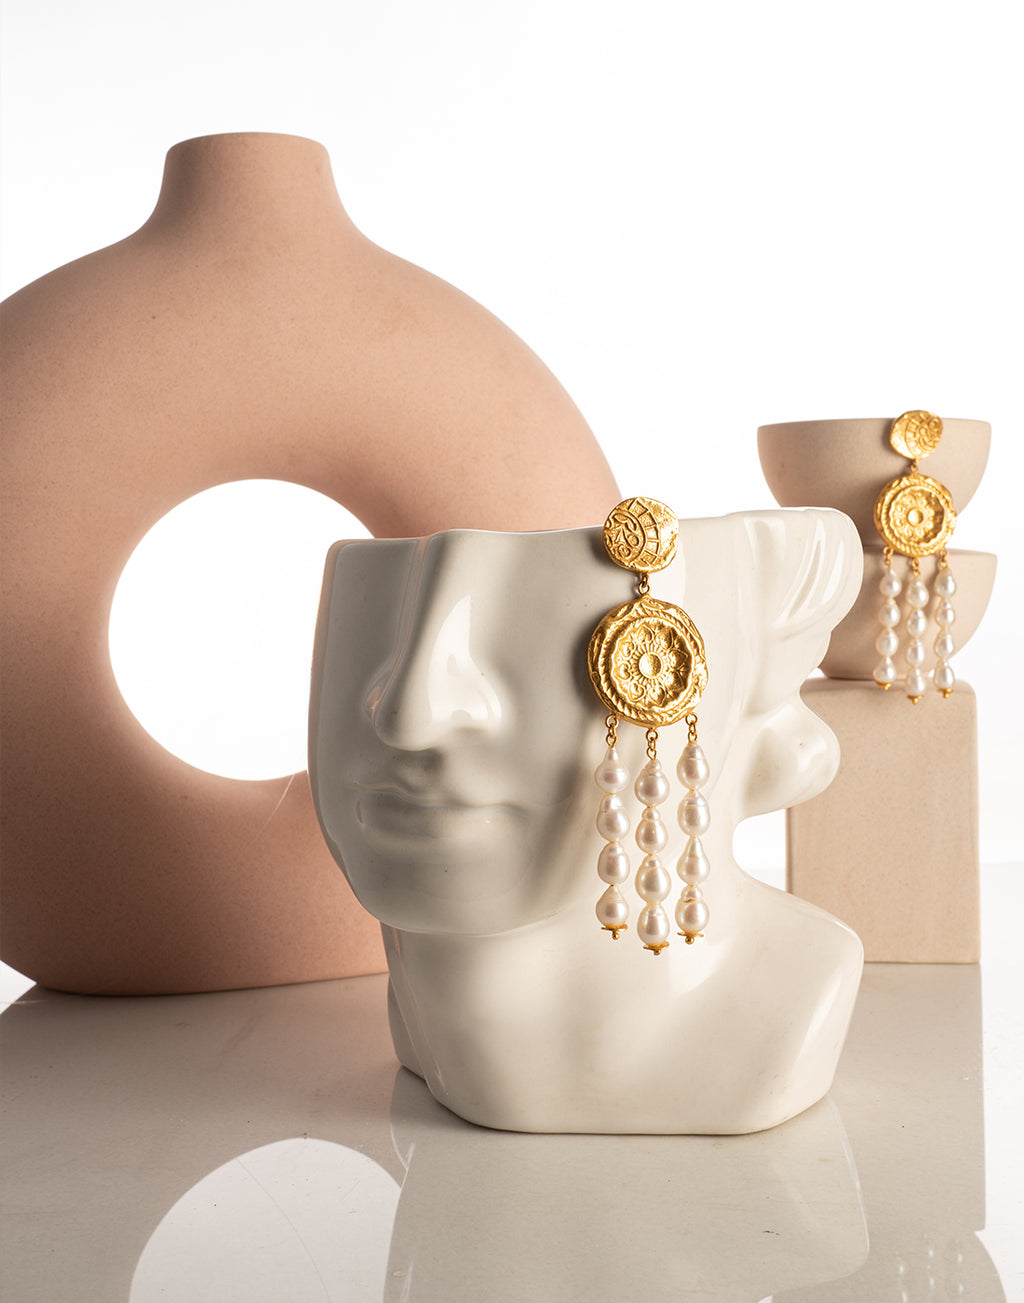 Dream Catcher Earrings - Statement Earrings - Gold-Plated & Hypoallergenic Jewellery - Made in India - Dubai Jewellery - Dori